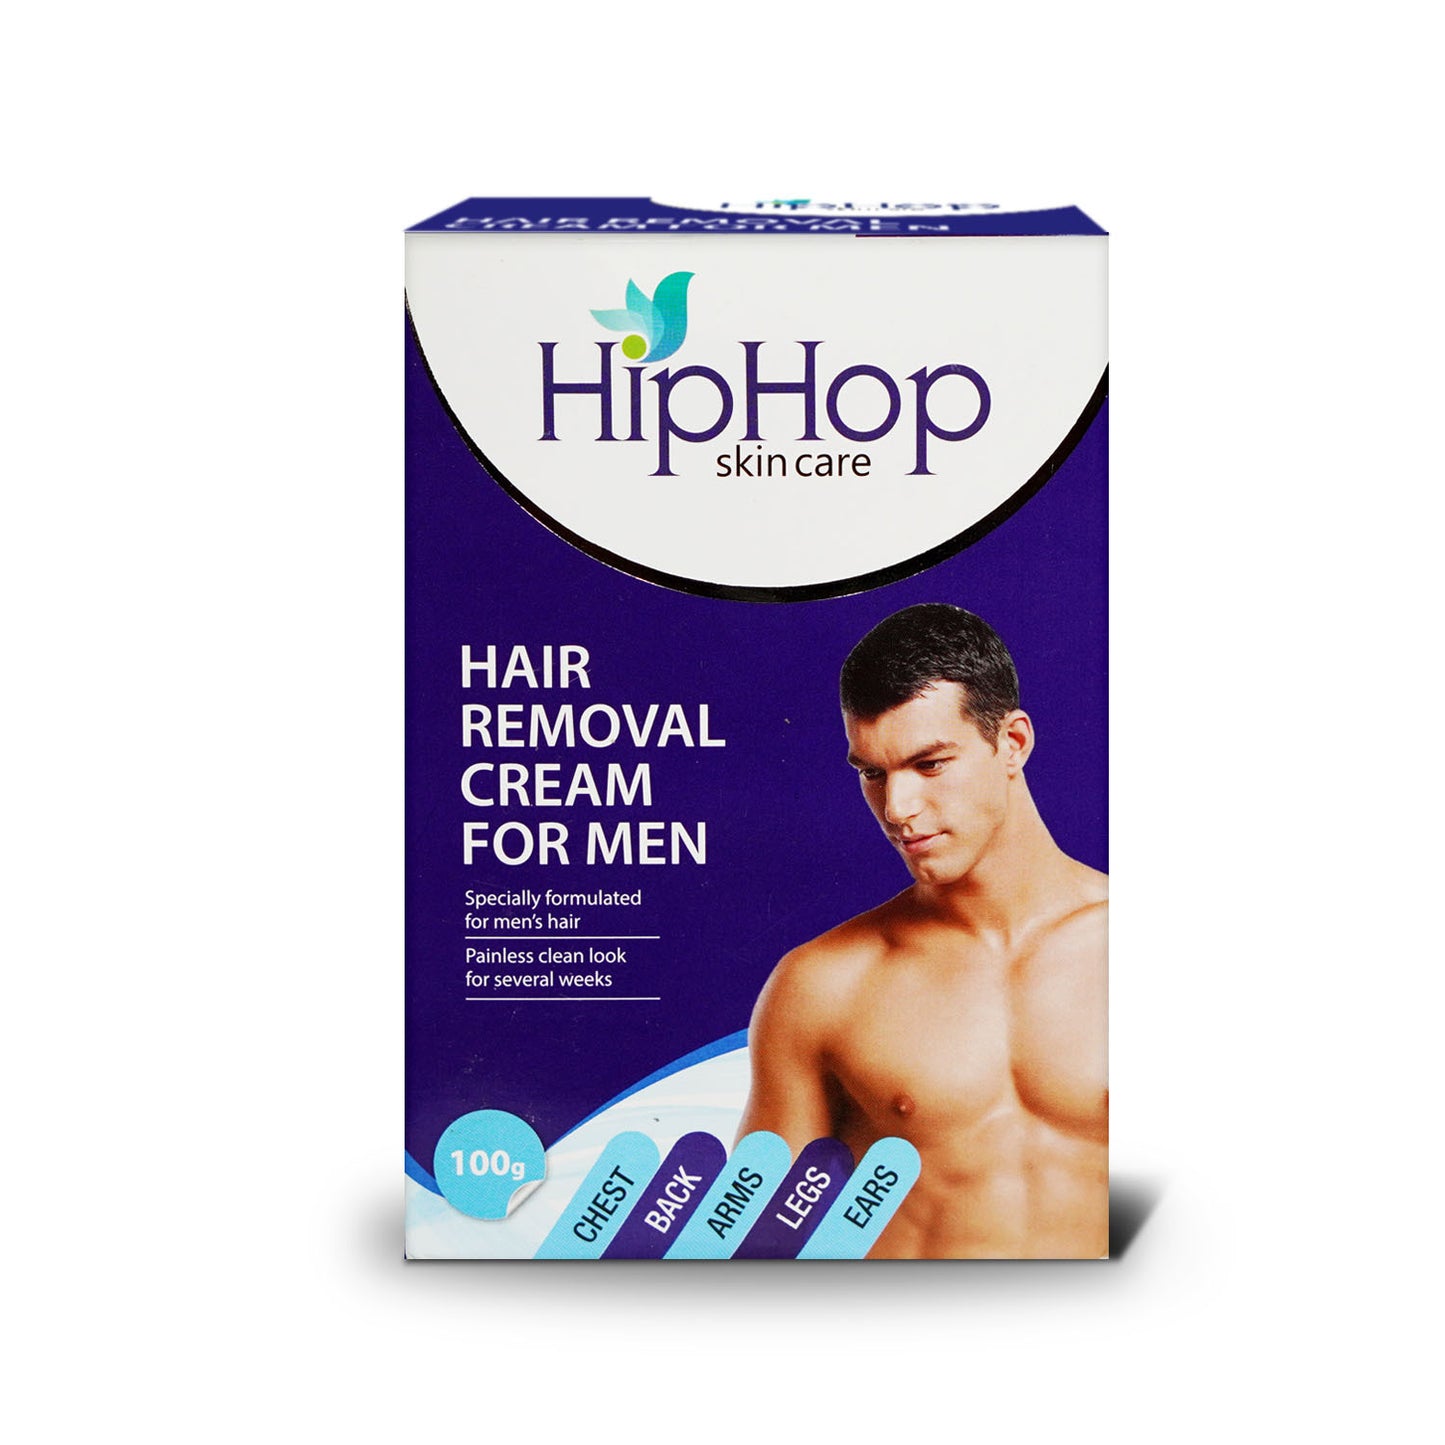 HipHop Facial Wax Strips (Argan Oil, 20 Strips) + Hair Removal Cream for Men (Aleo Vera, 100gm)